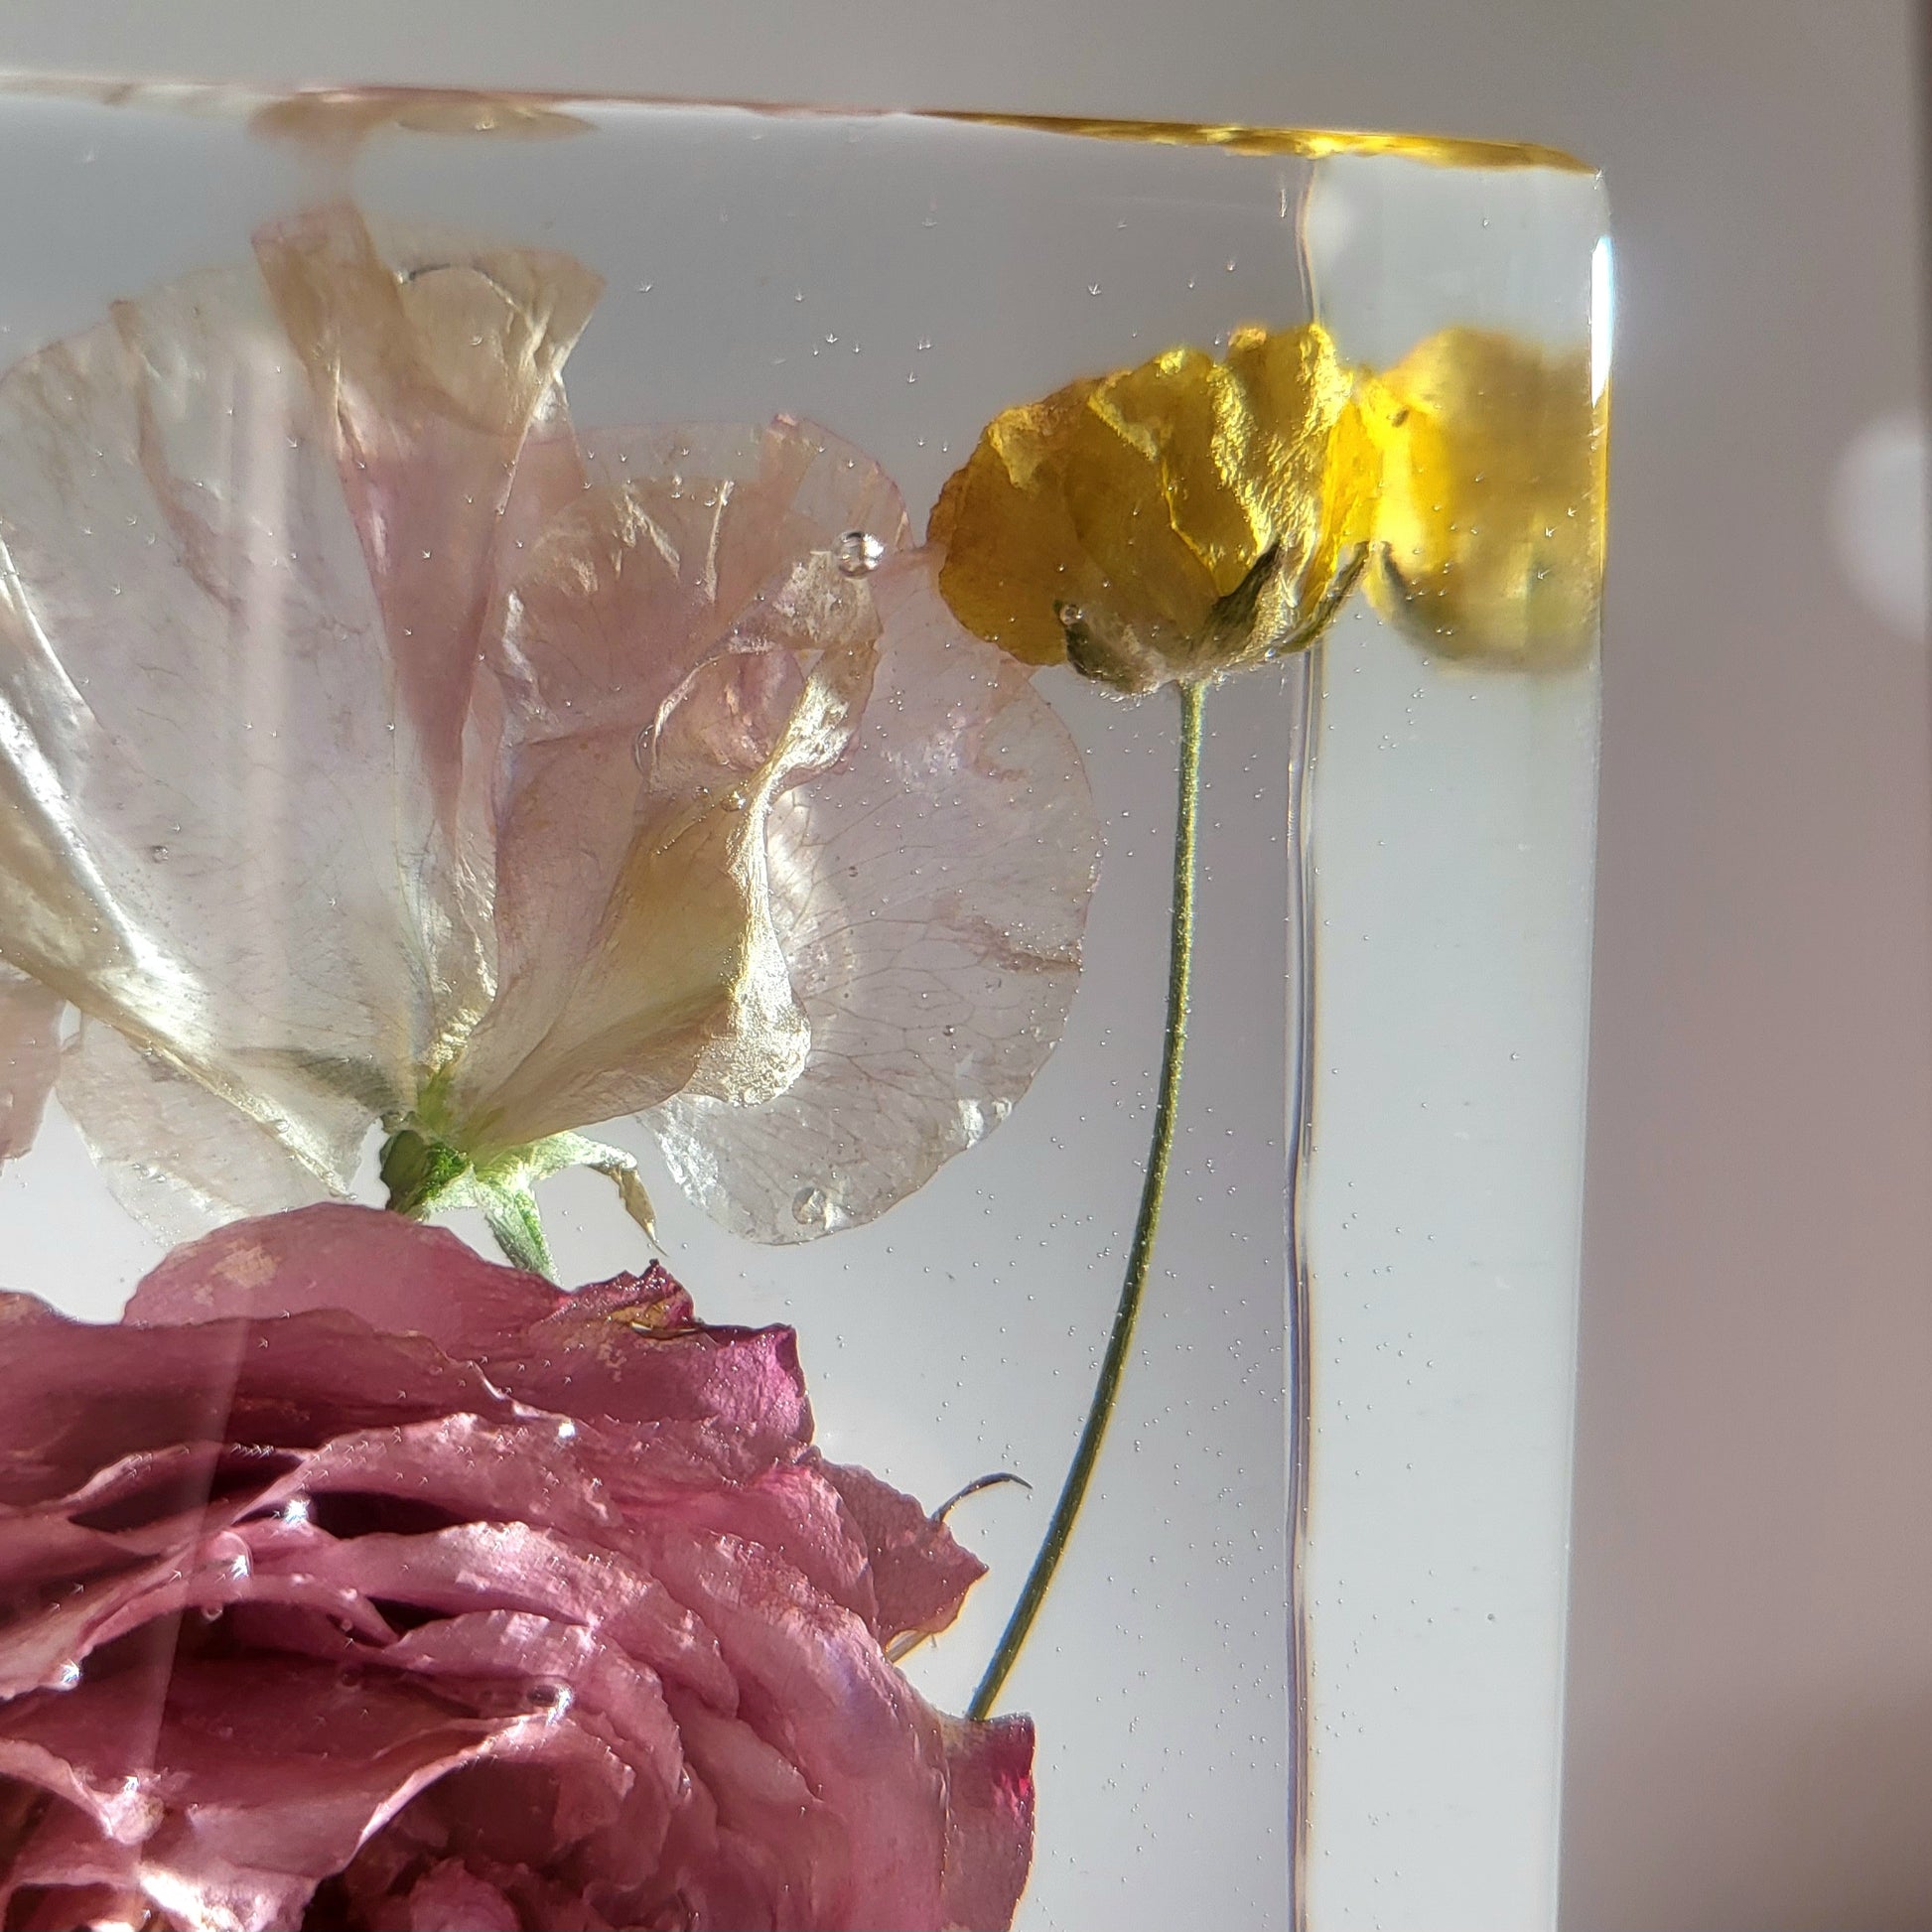 8"x 8" 3D Floral Resin Art Cube Wedding Bouquet Preservation Modern Fried Flowers Square Save Your Gift Keepsake - flofloflowery